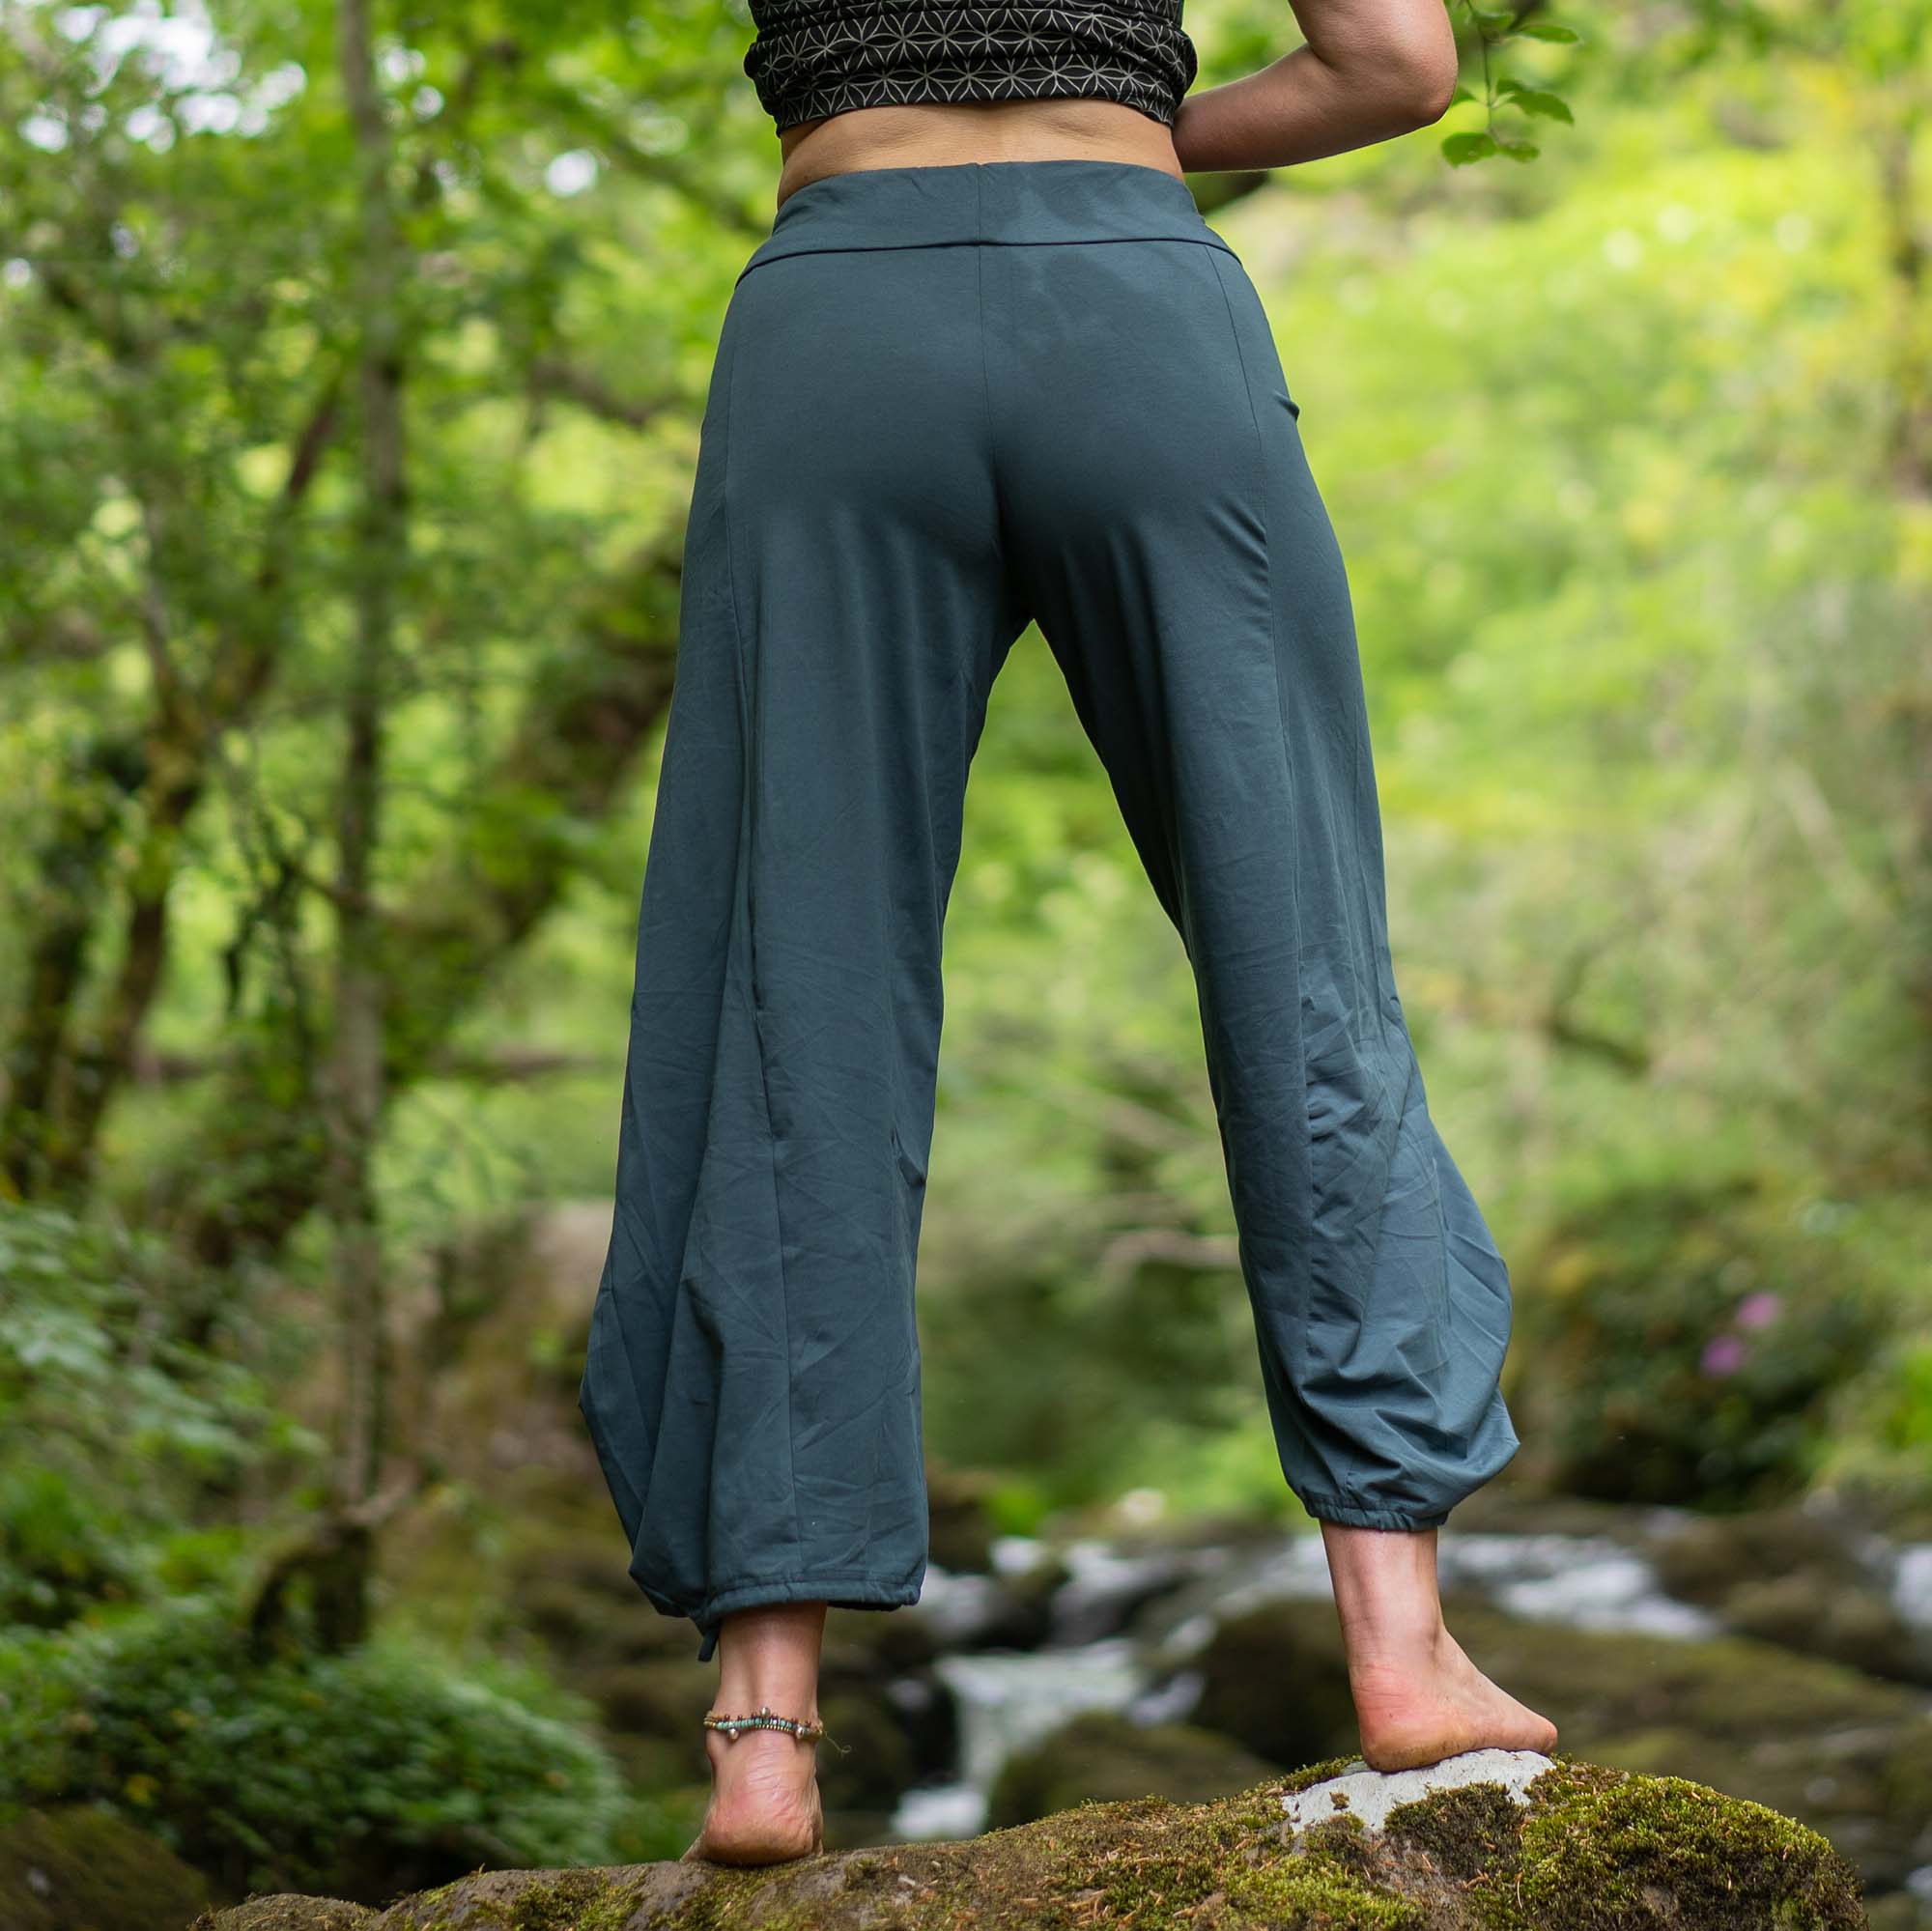 Cotton Yoga Pants With Pockets in Black, Harem Pants Women, Meditation Pants  -  UK